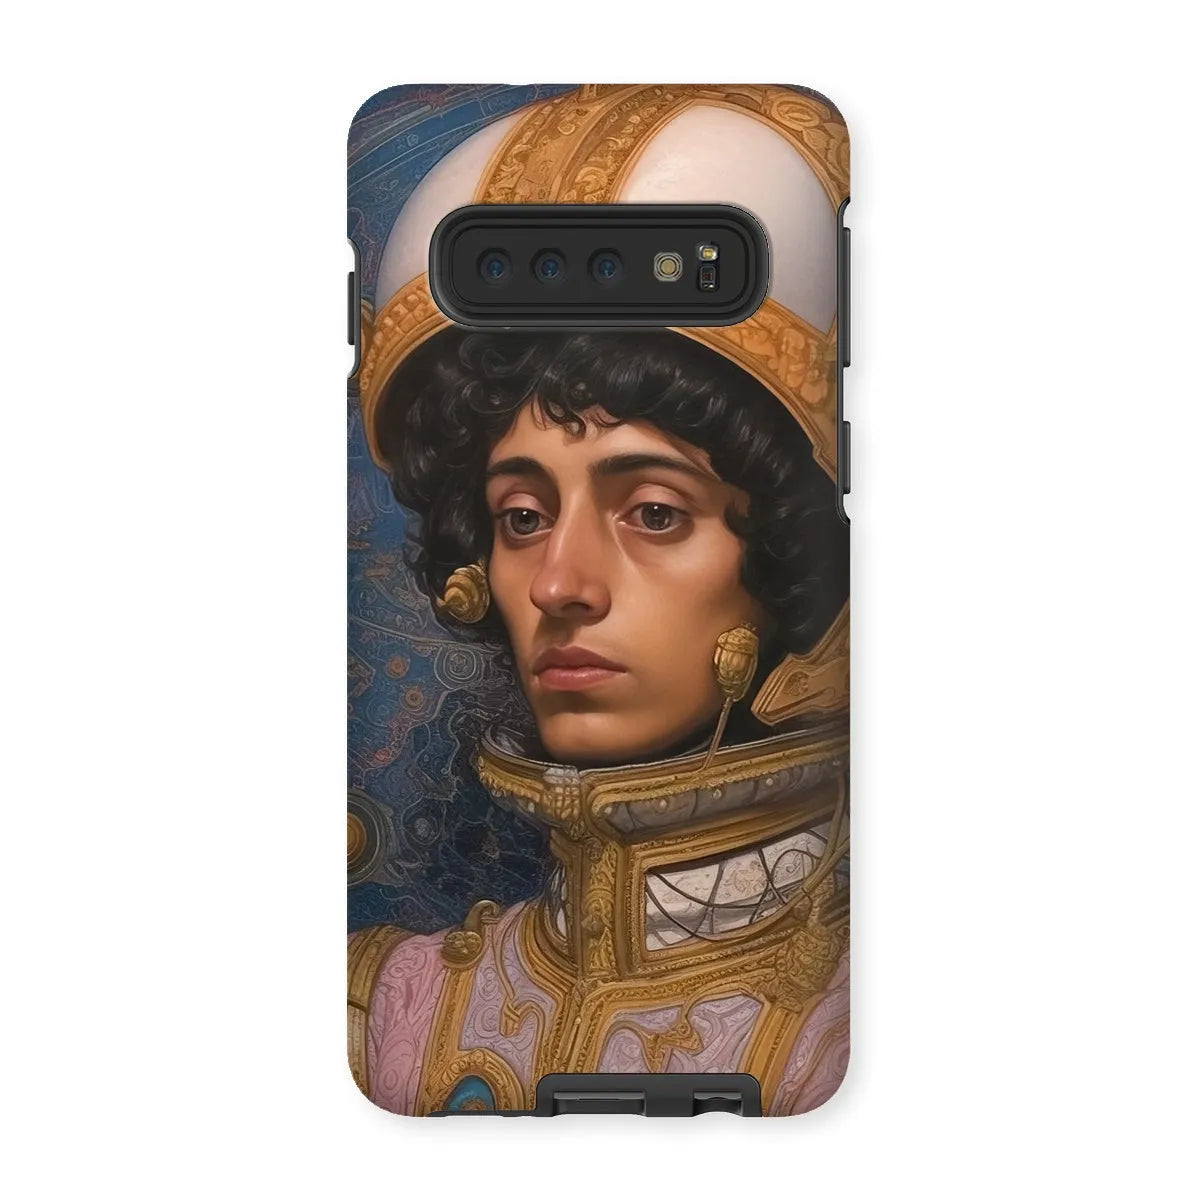 Samir The Gay Astronaut - Lgbtq Art Phone Case - Samsung Galaxy S10 / Matte - Mobile Phone Cases - Aesthetic Art